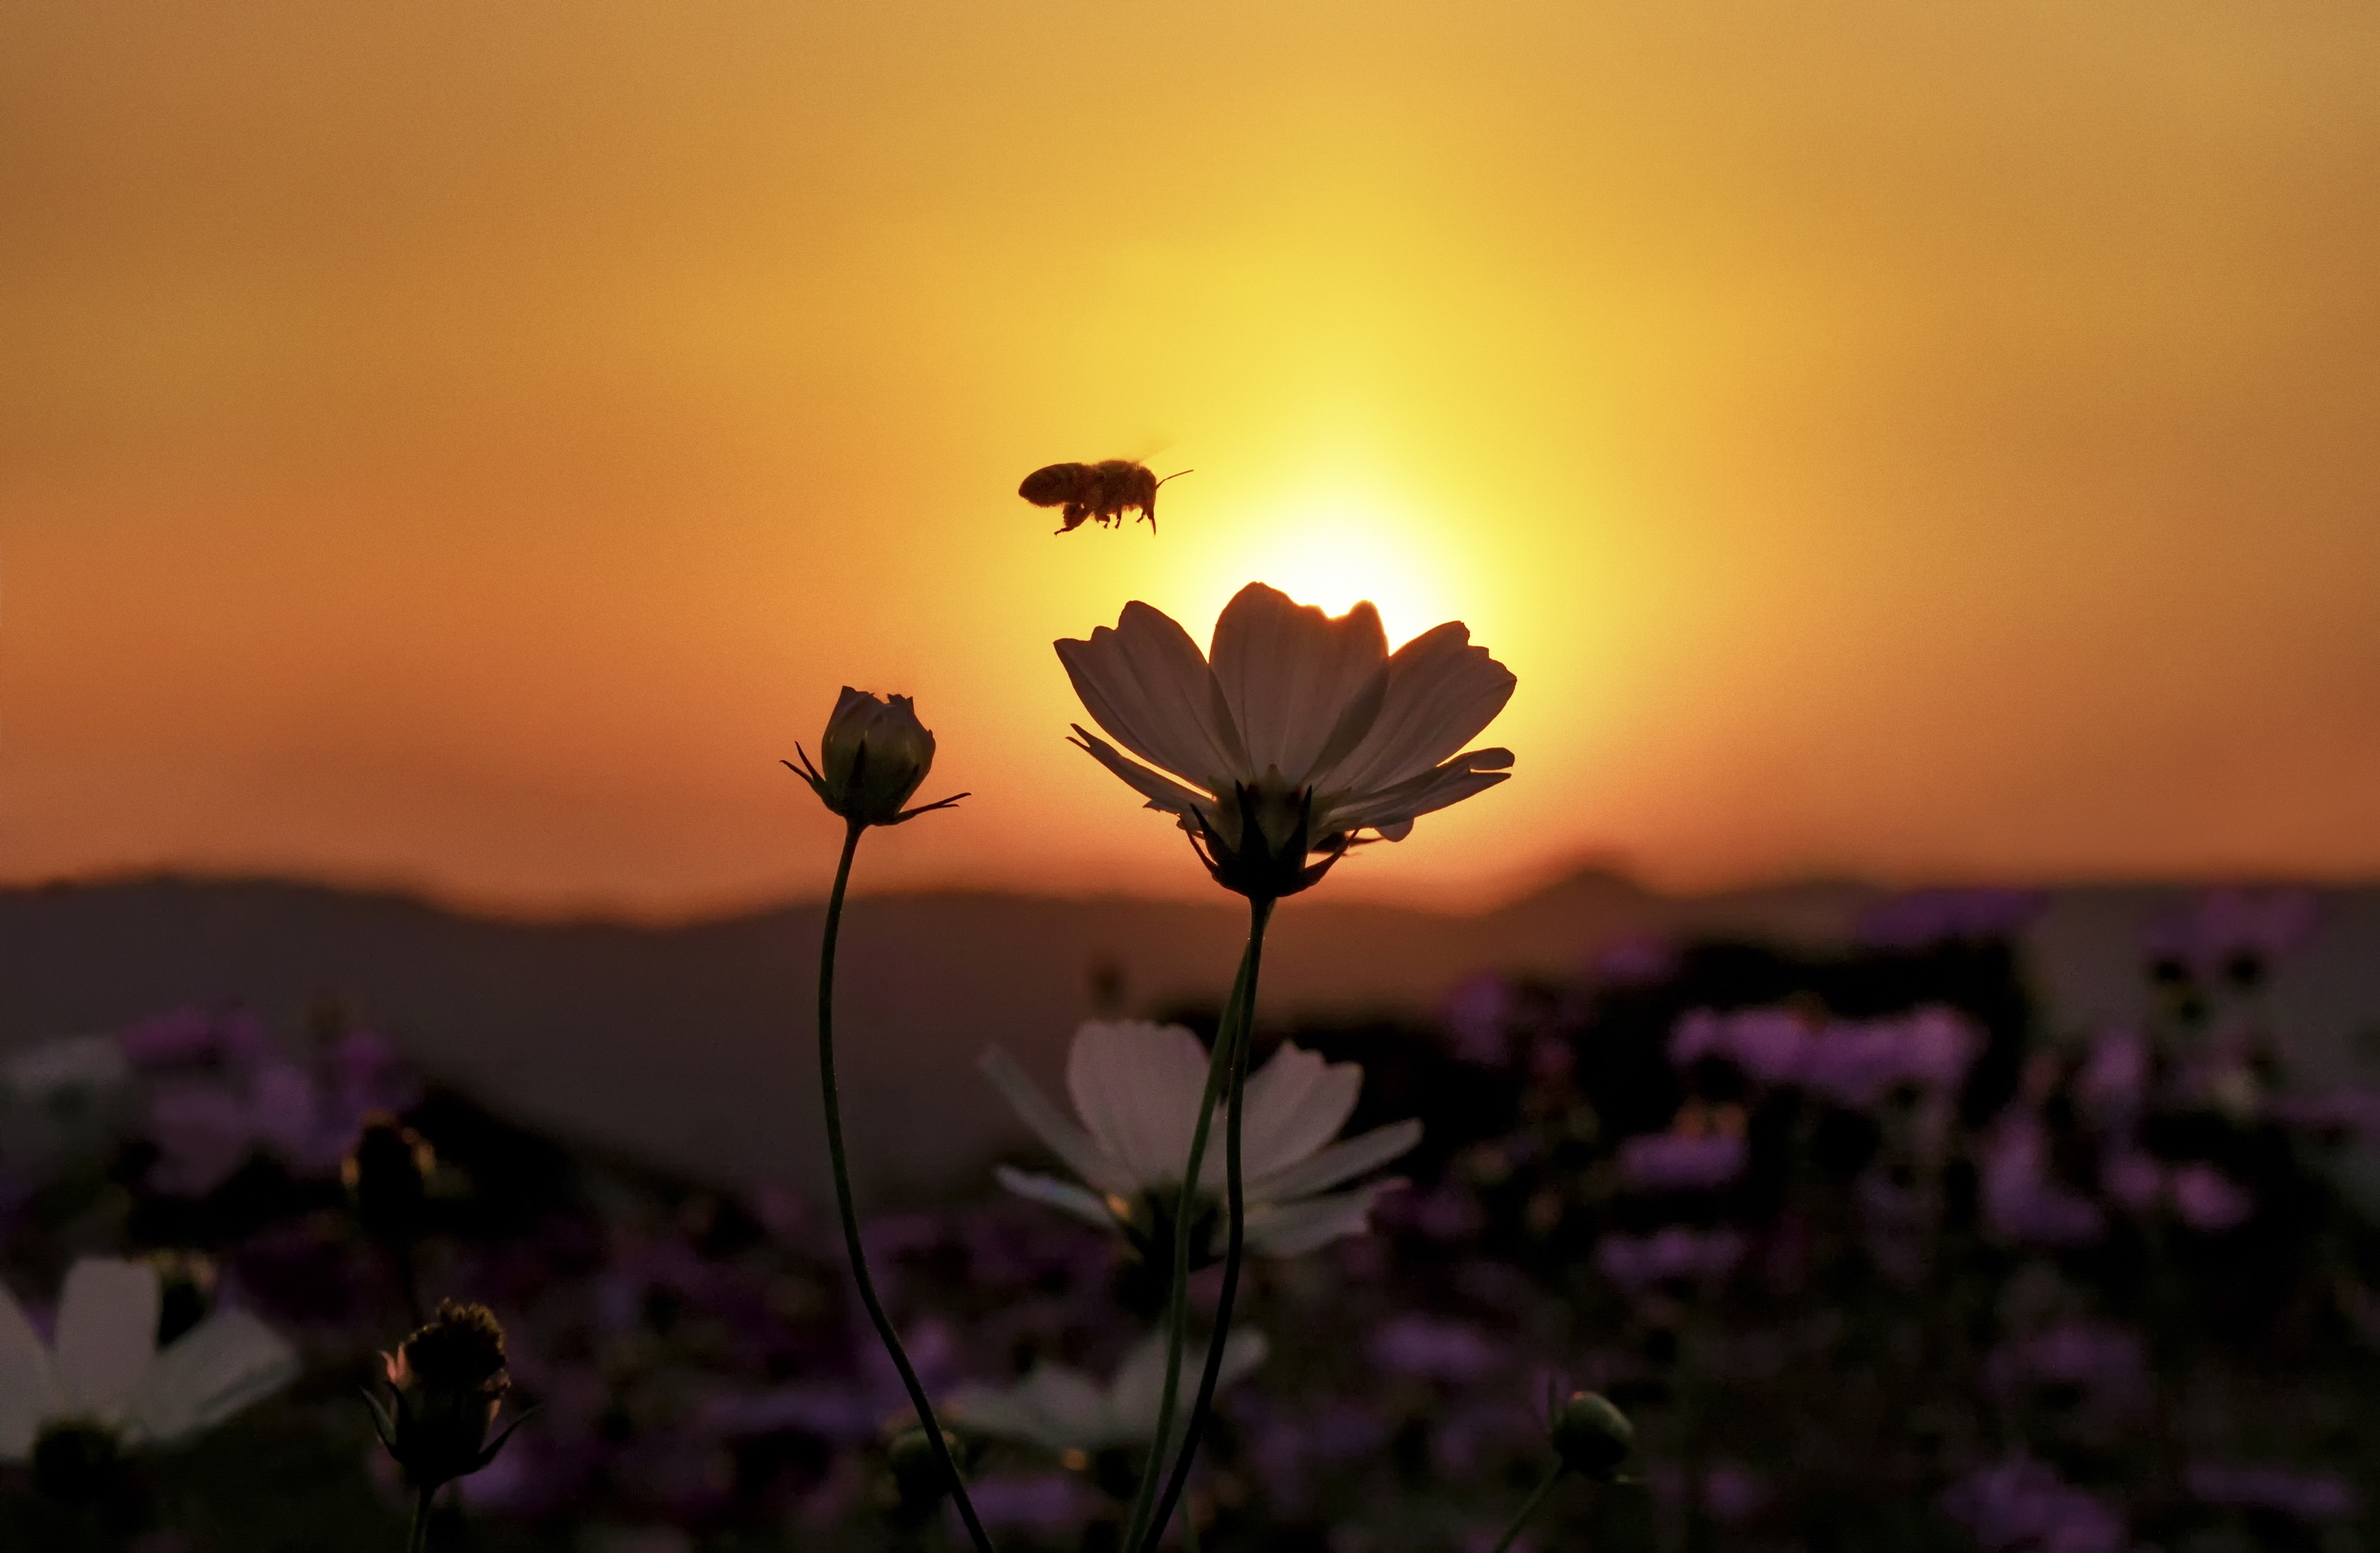 Flower sunset. Цветы на закате. Цветы на Восходе солнца. Цветы на фоне заката. Цветы на фоне солнца.